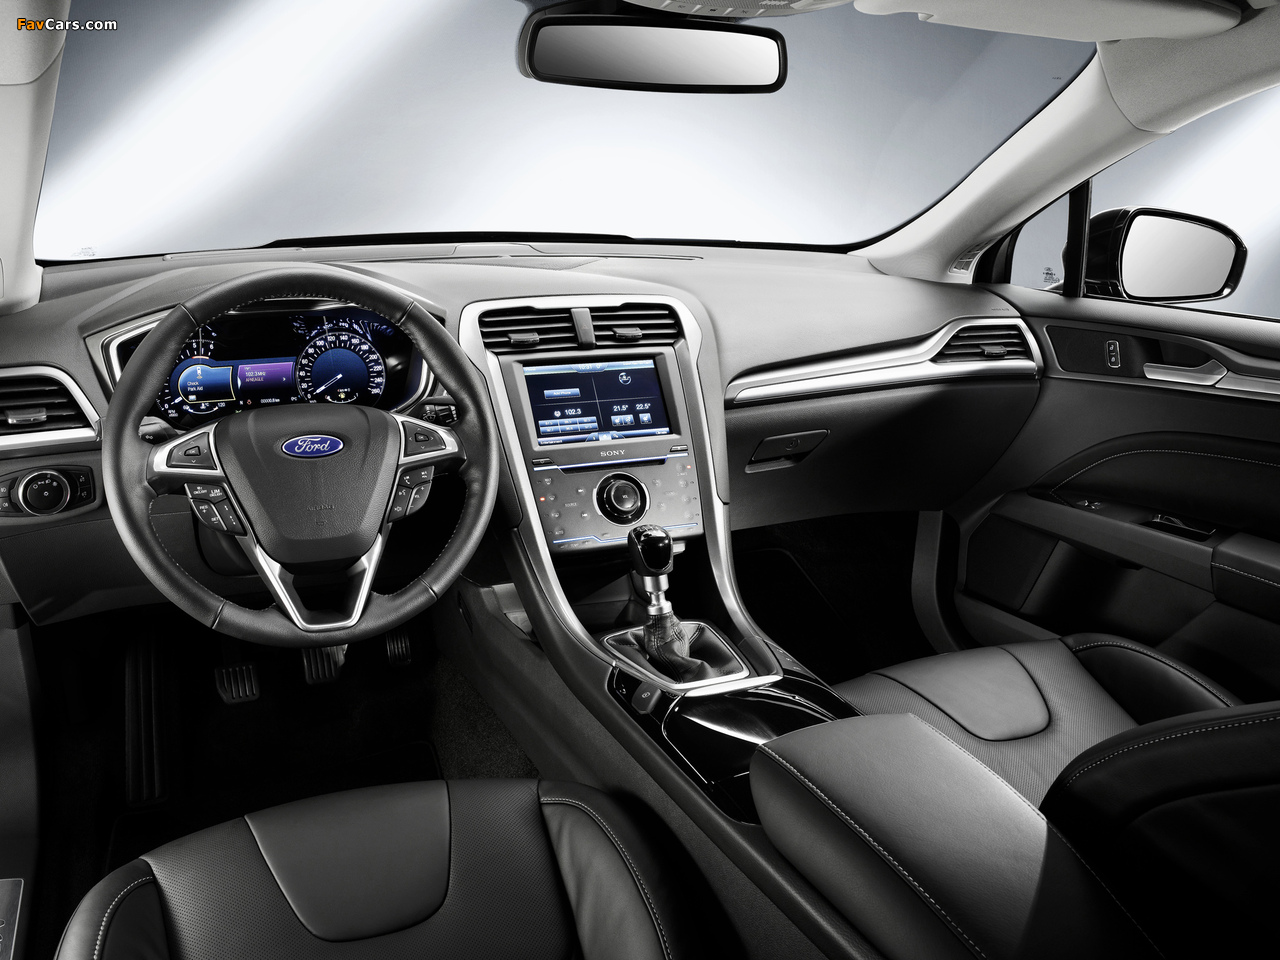 Ford Mondeo Hatchback 2013 images (1280 x 960)